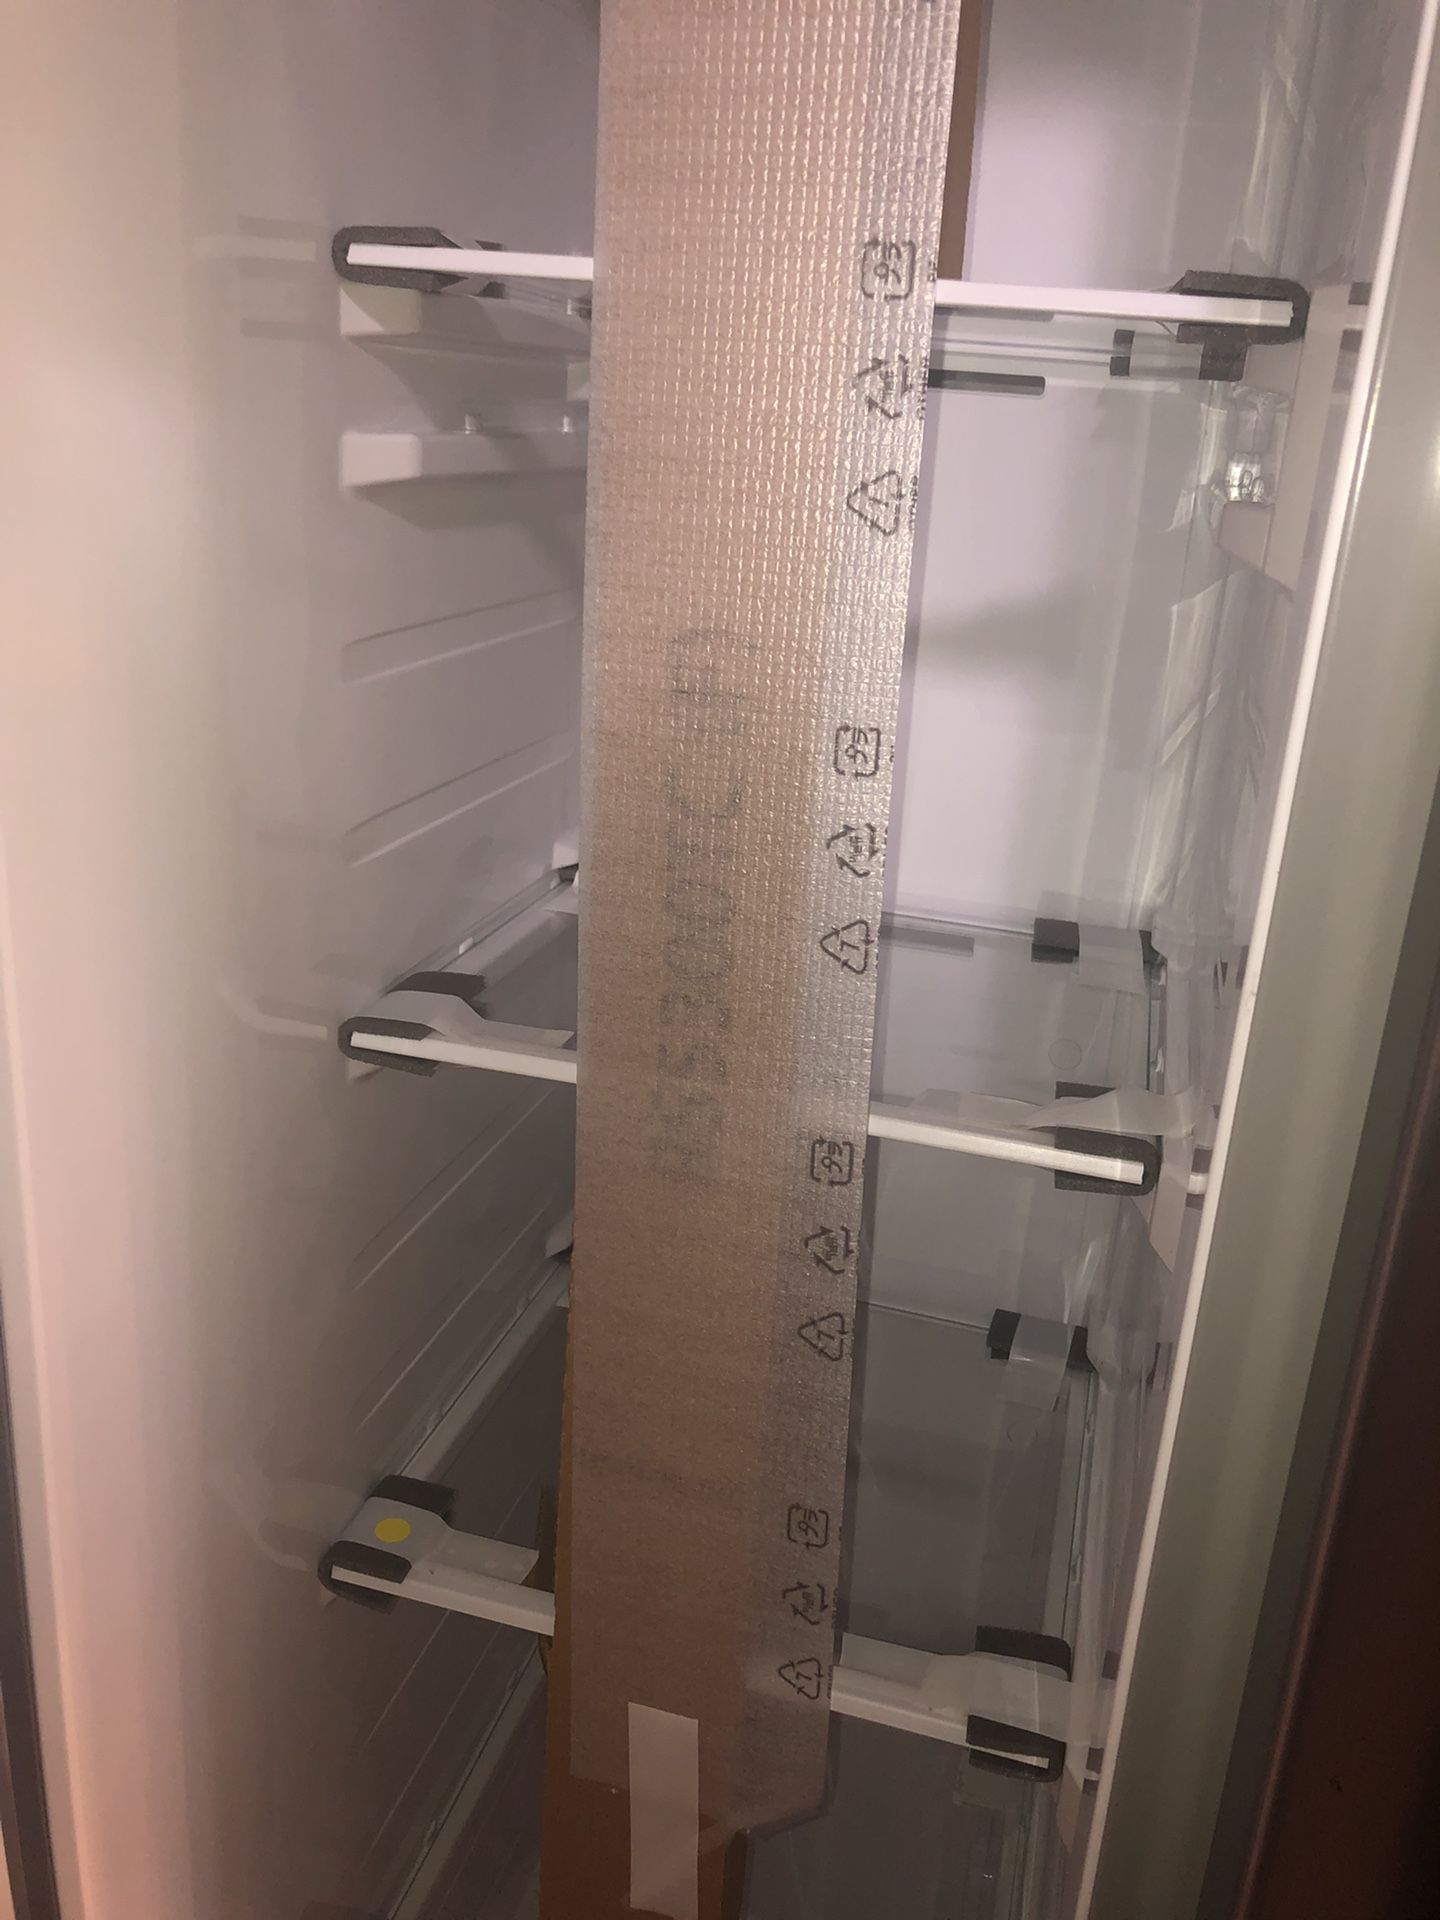 Samsung Refrigerator Brand New 1150$